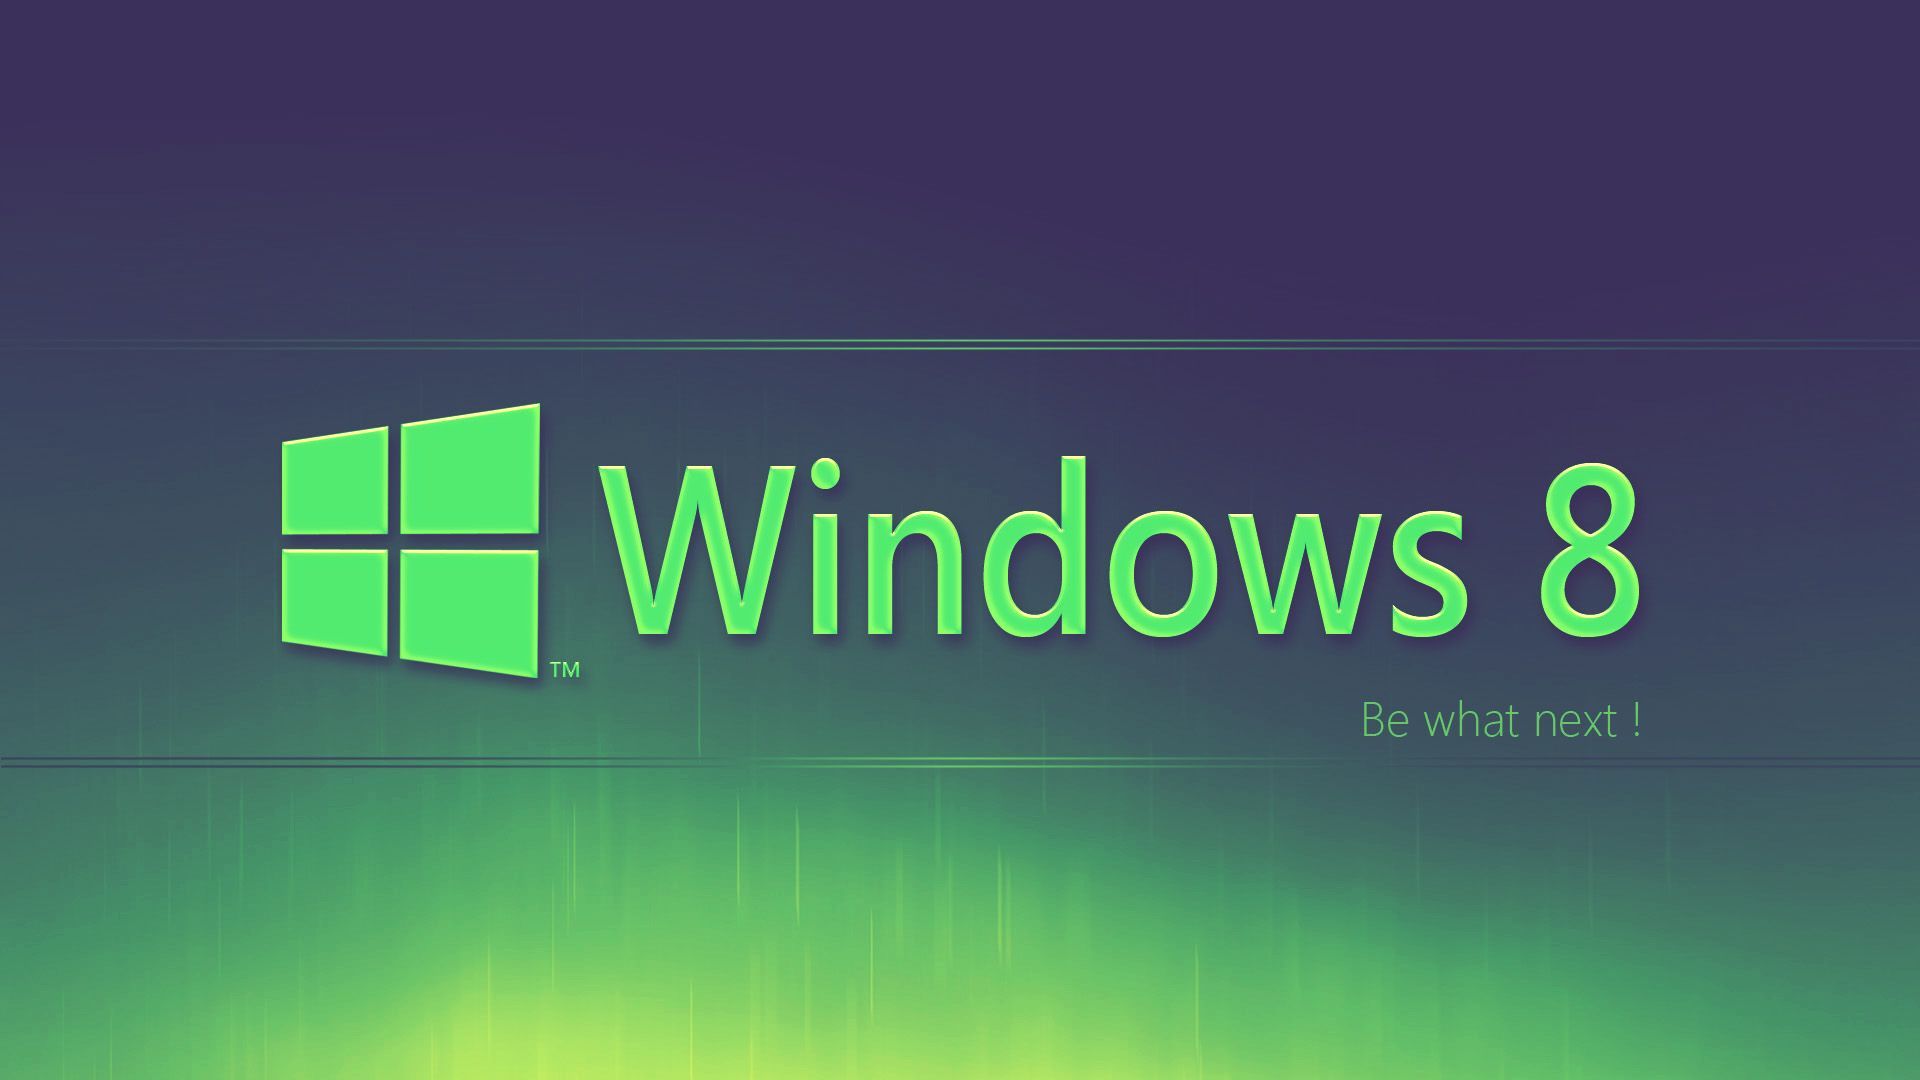 Windows 8 Hd Wallpaper Download - HD Wallpaper 